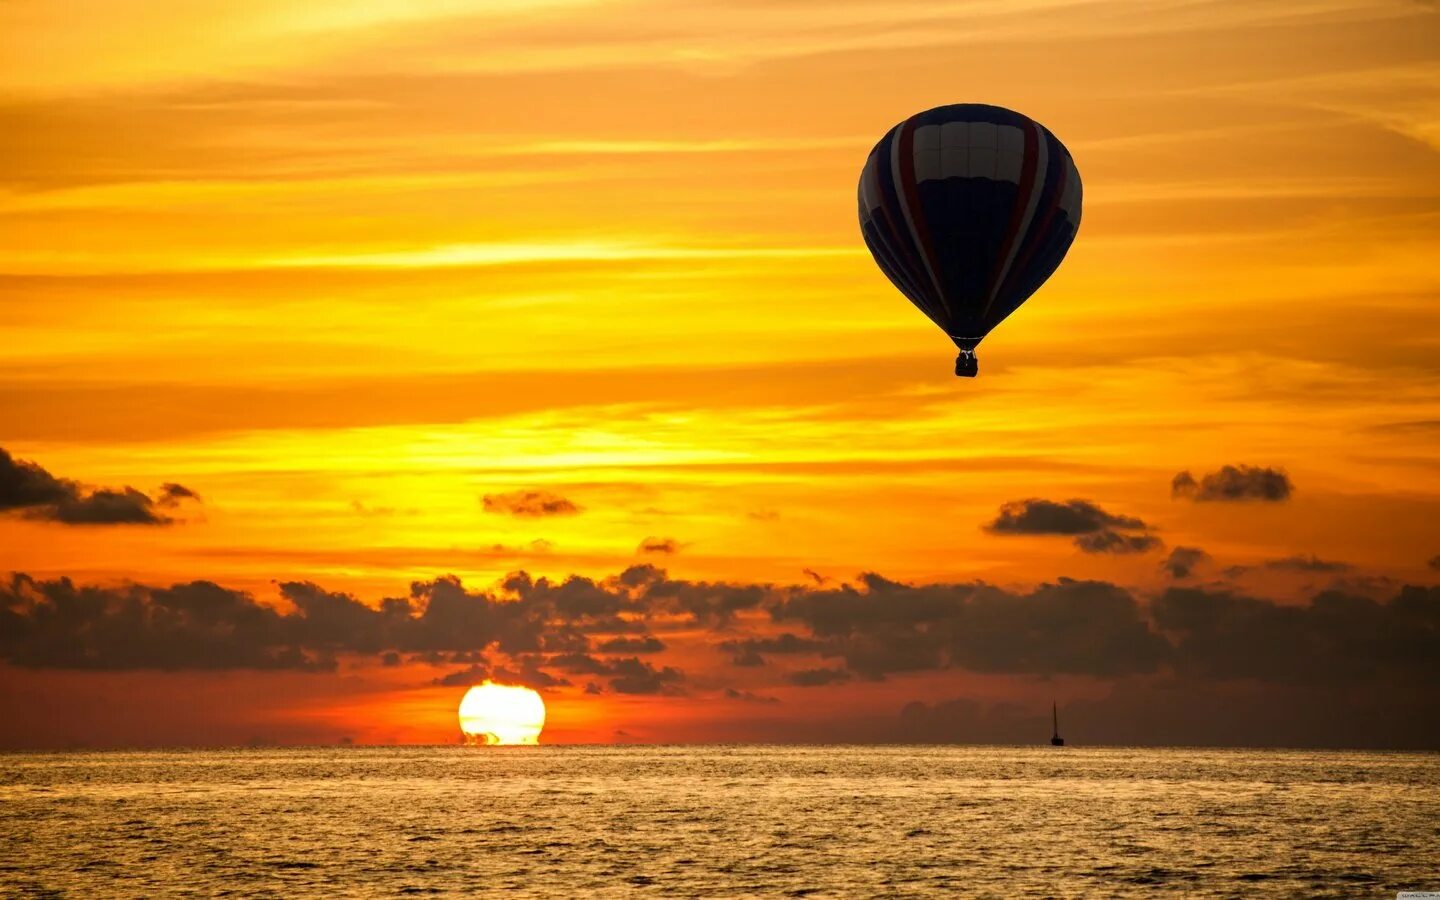 Воздушный шар на море. Воздушный шар на закате. Воздушный шар на рассвете. Воздушные шары на рассвете. Полет на воздушном шаре на закате.